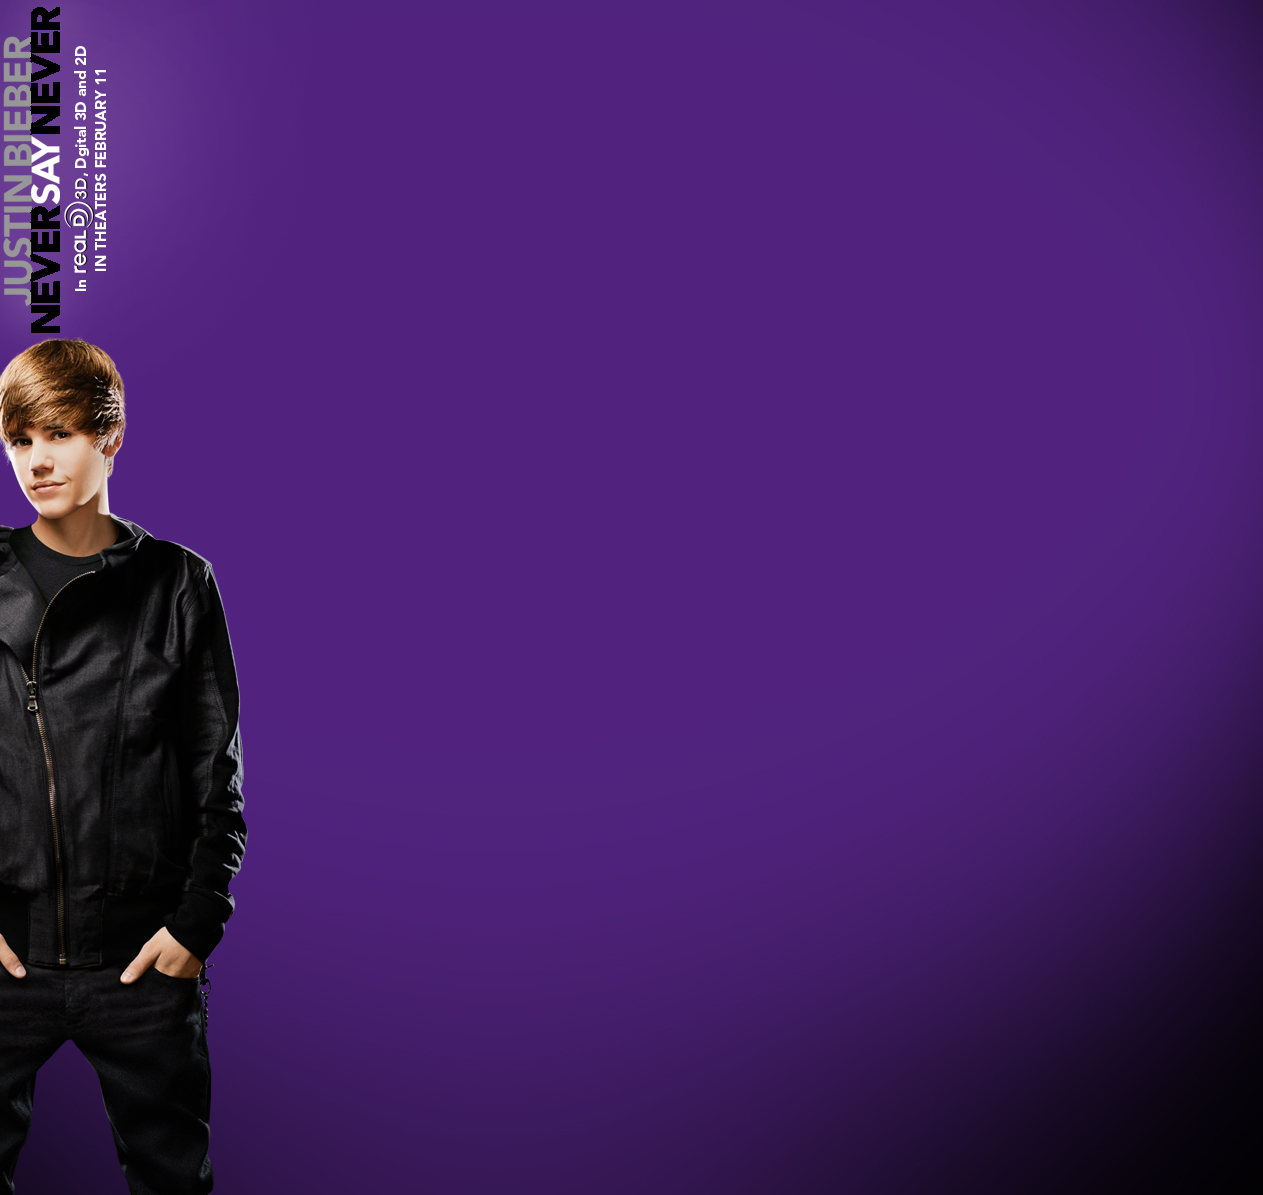 http://1.bp.blogspot.com/-7pISebVeRy0/Tbof411AF4I/AAAAAAAADXE/iJ43Knb5qaU/s1600/Justin_Bieber_purple_Backgrounds.jpg